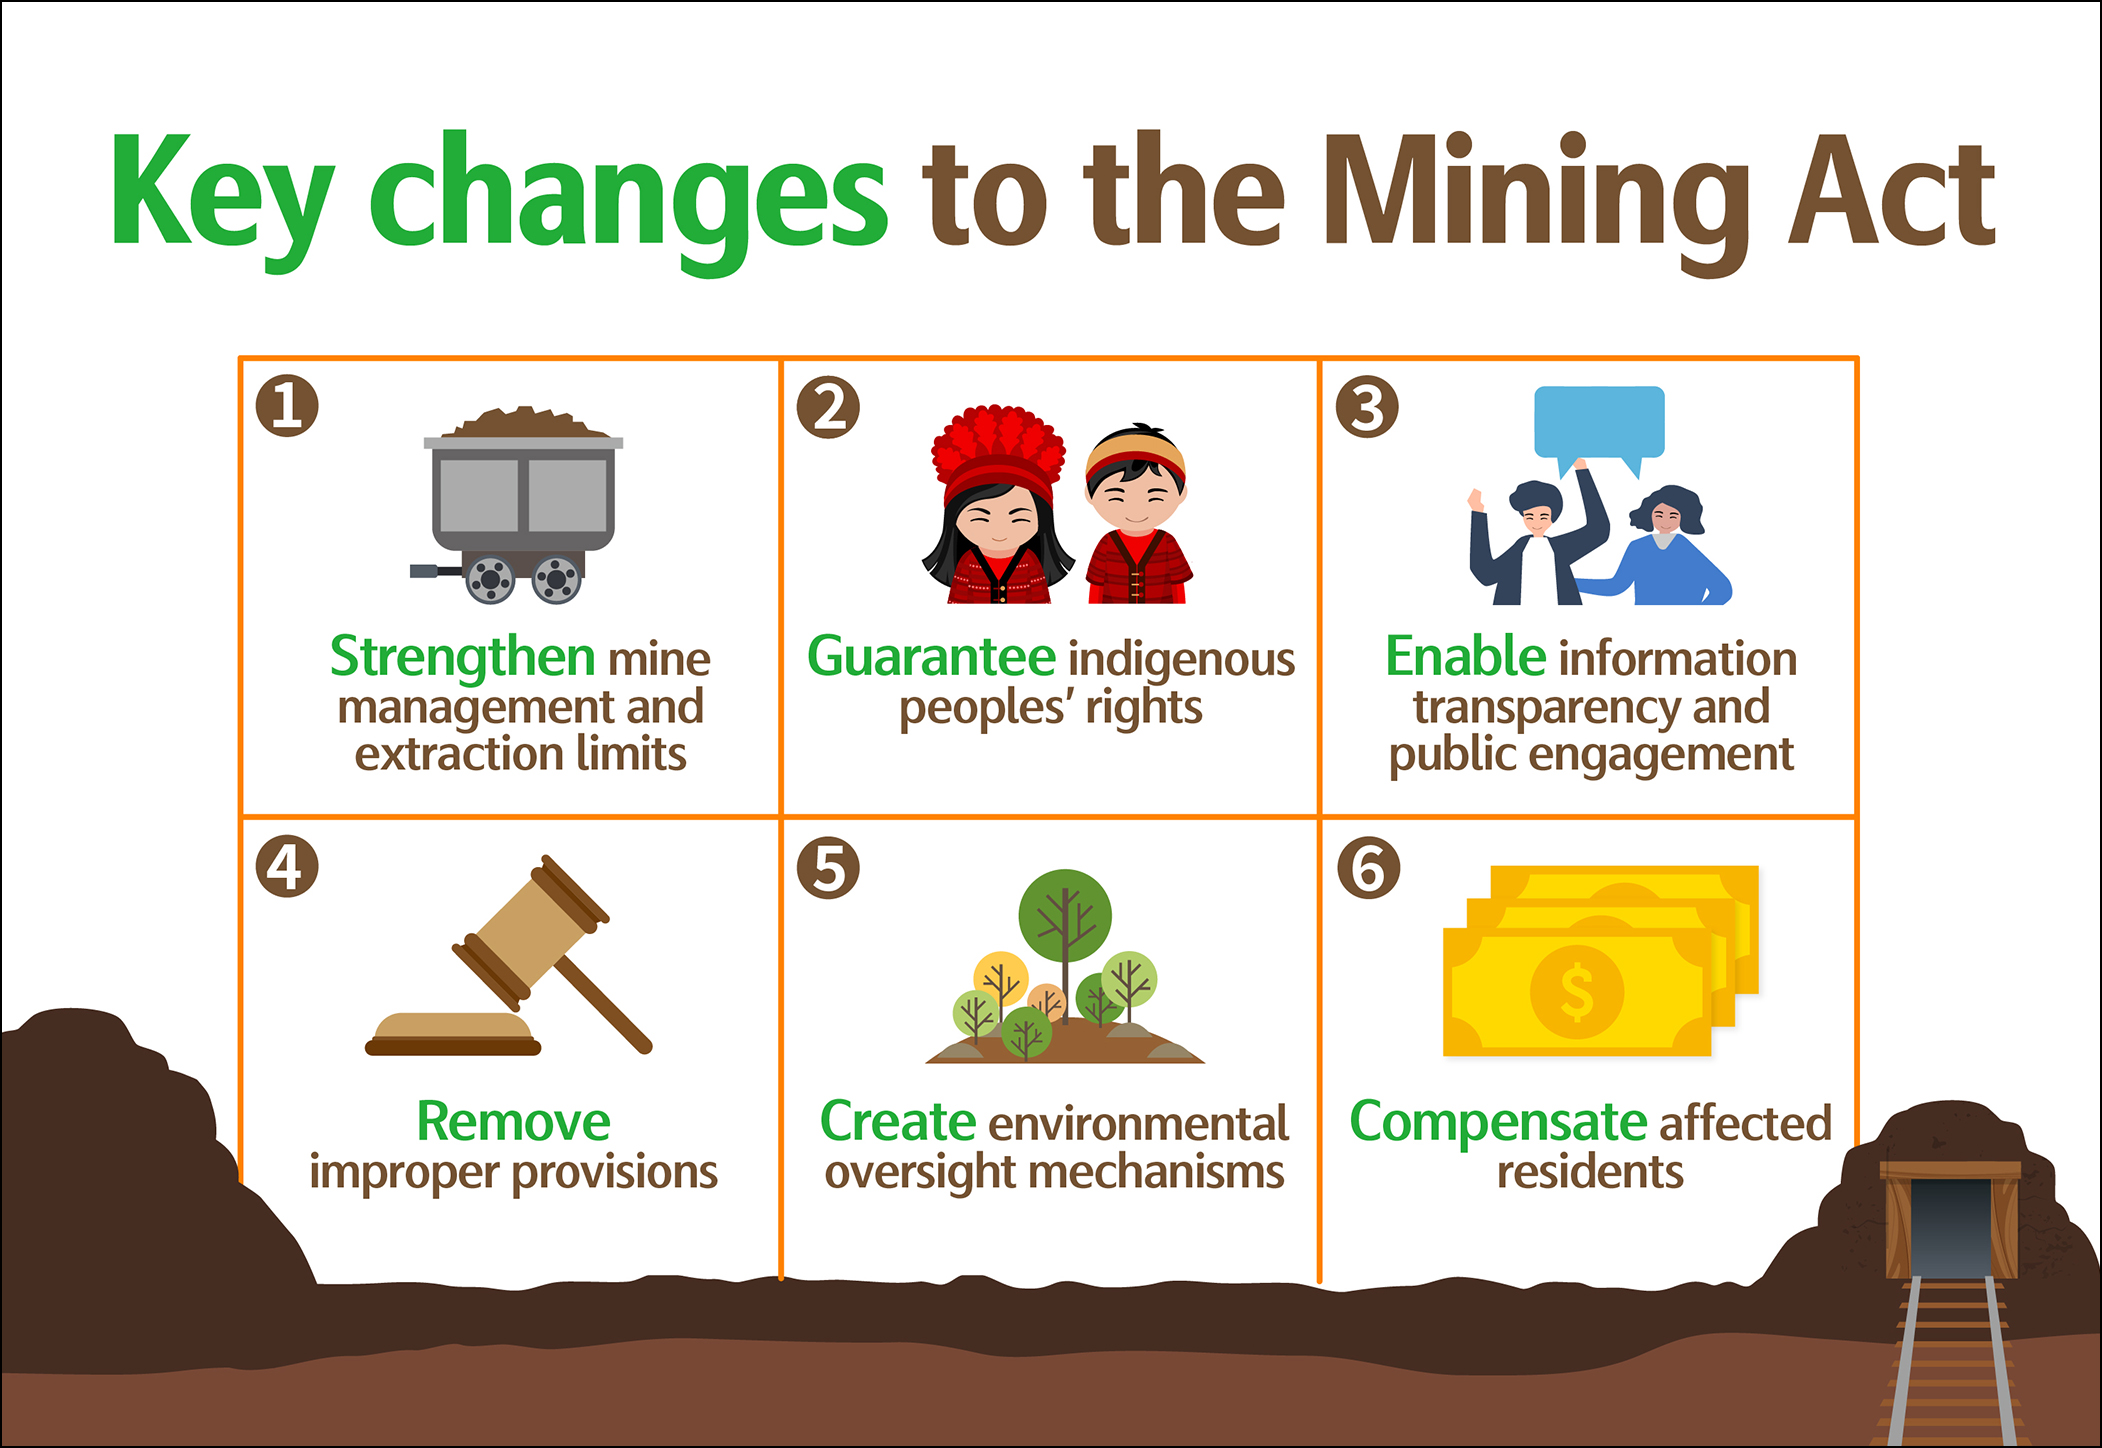 Amendments to the Mining Act